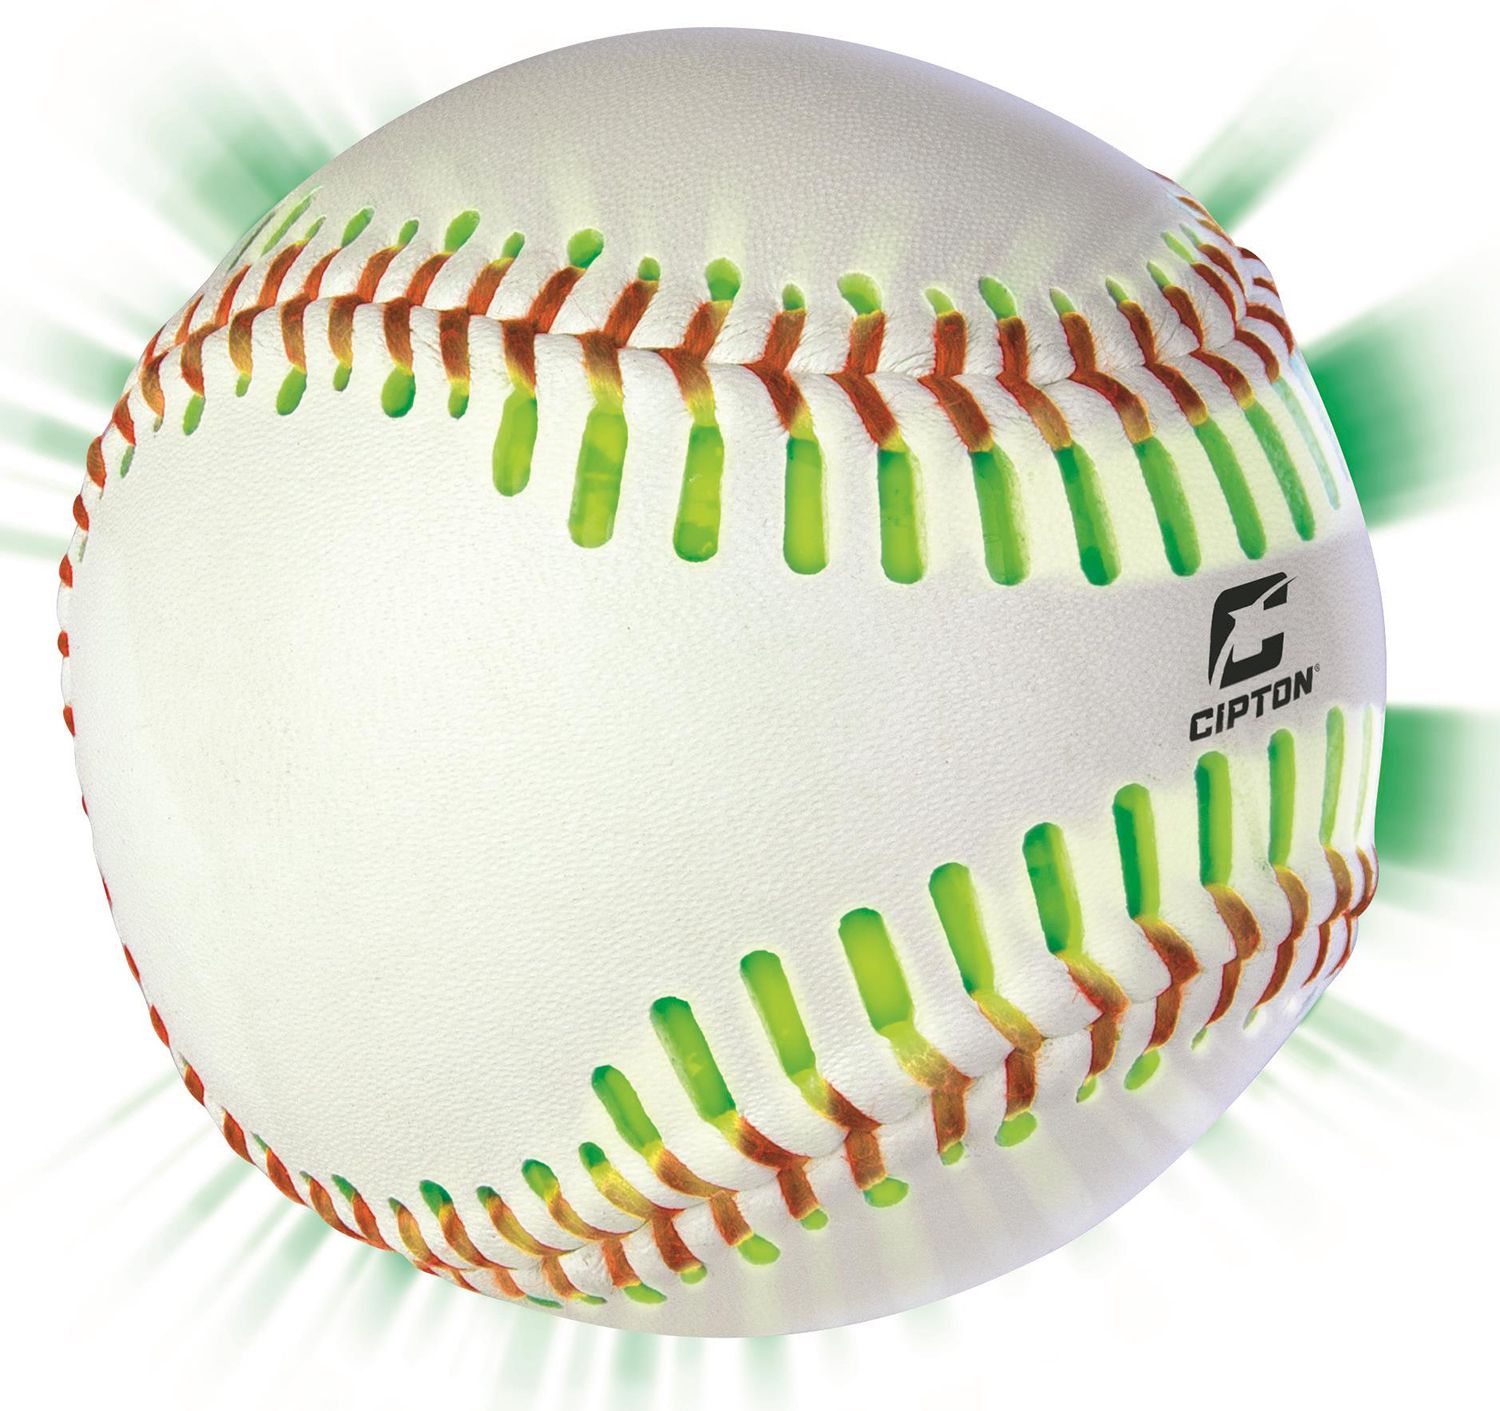 Cipton LED Light-Up Baseball